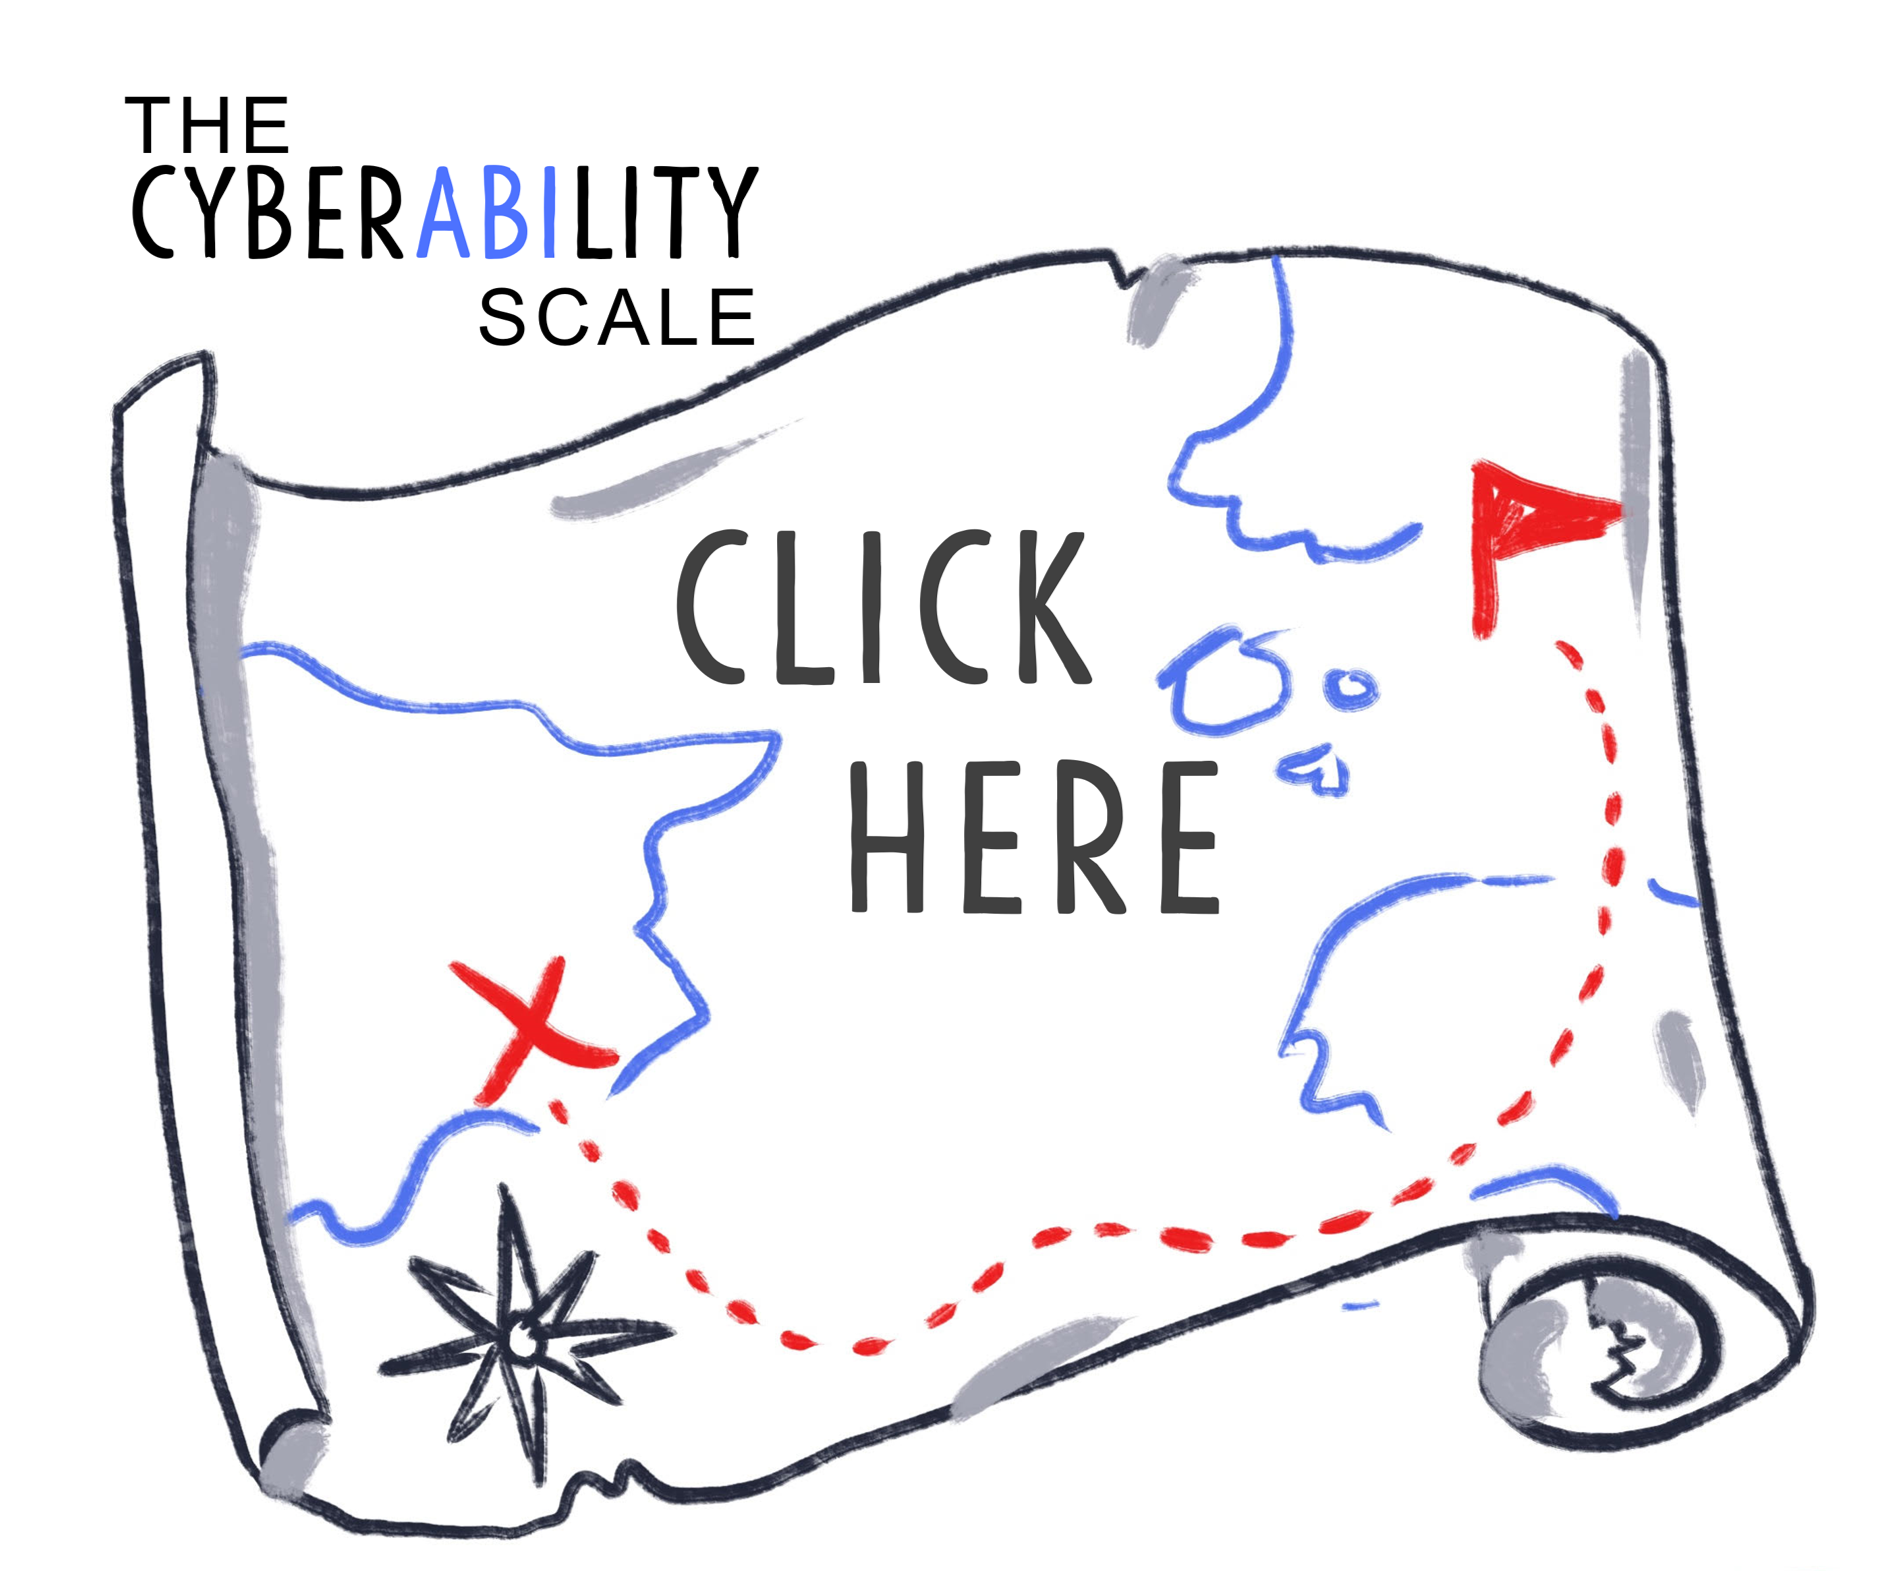 cyberabilty scale image button